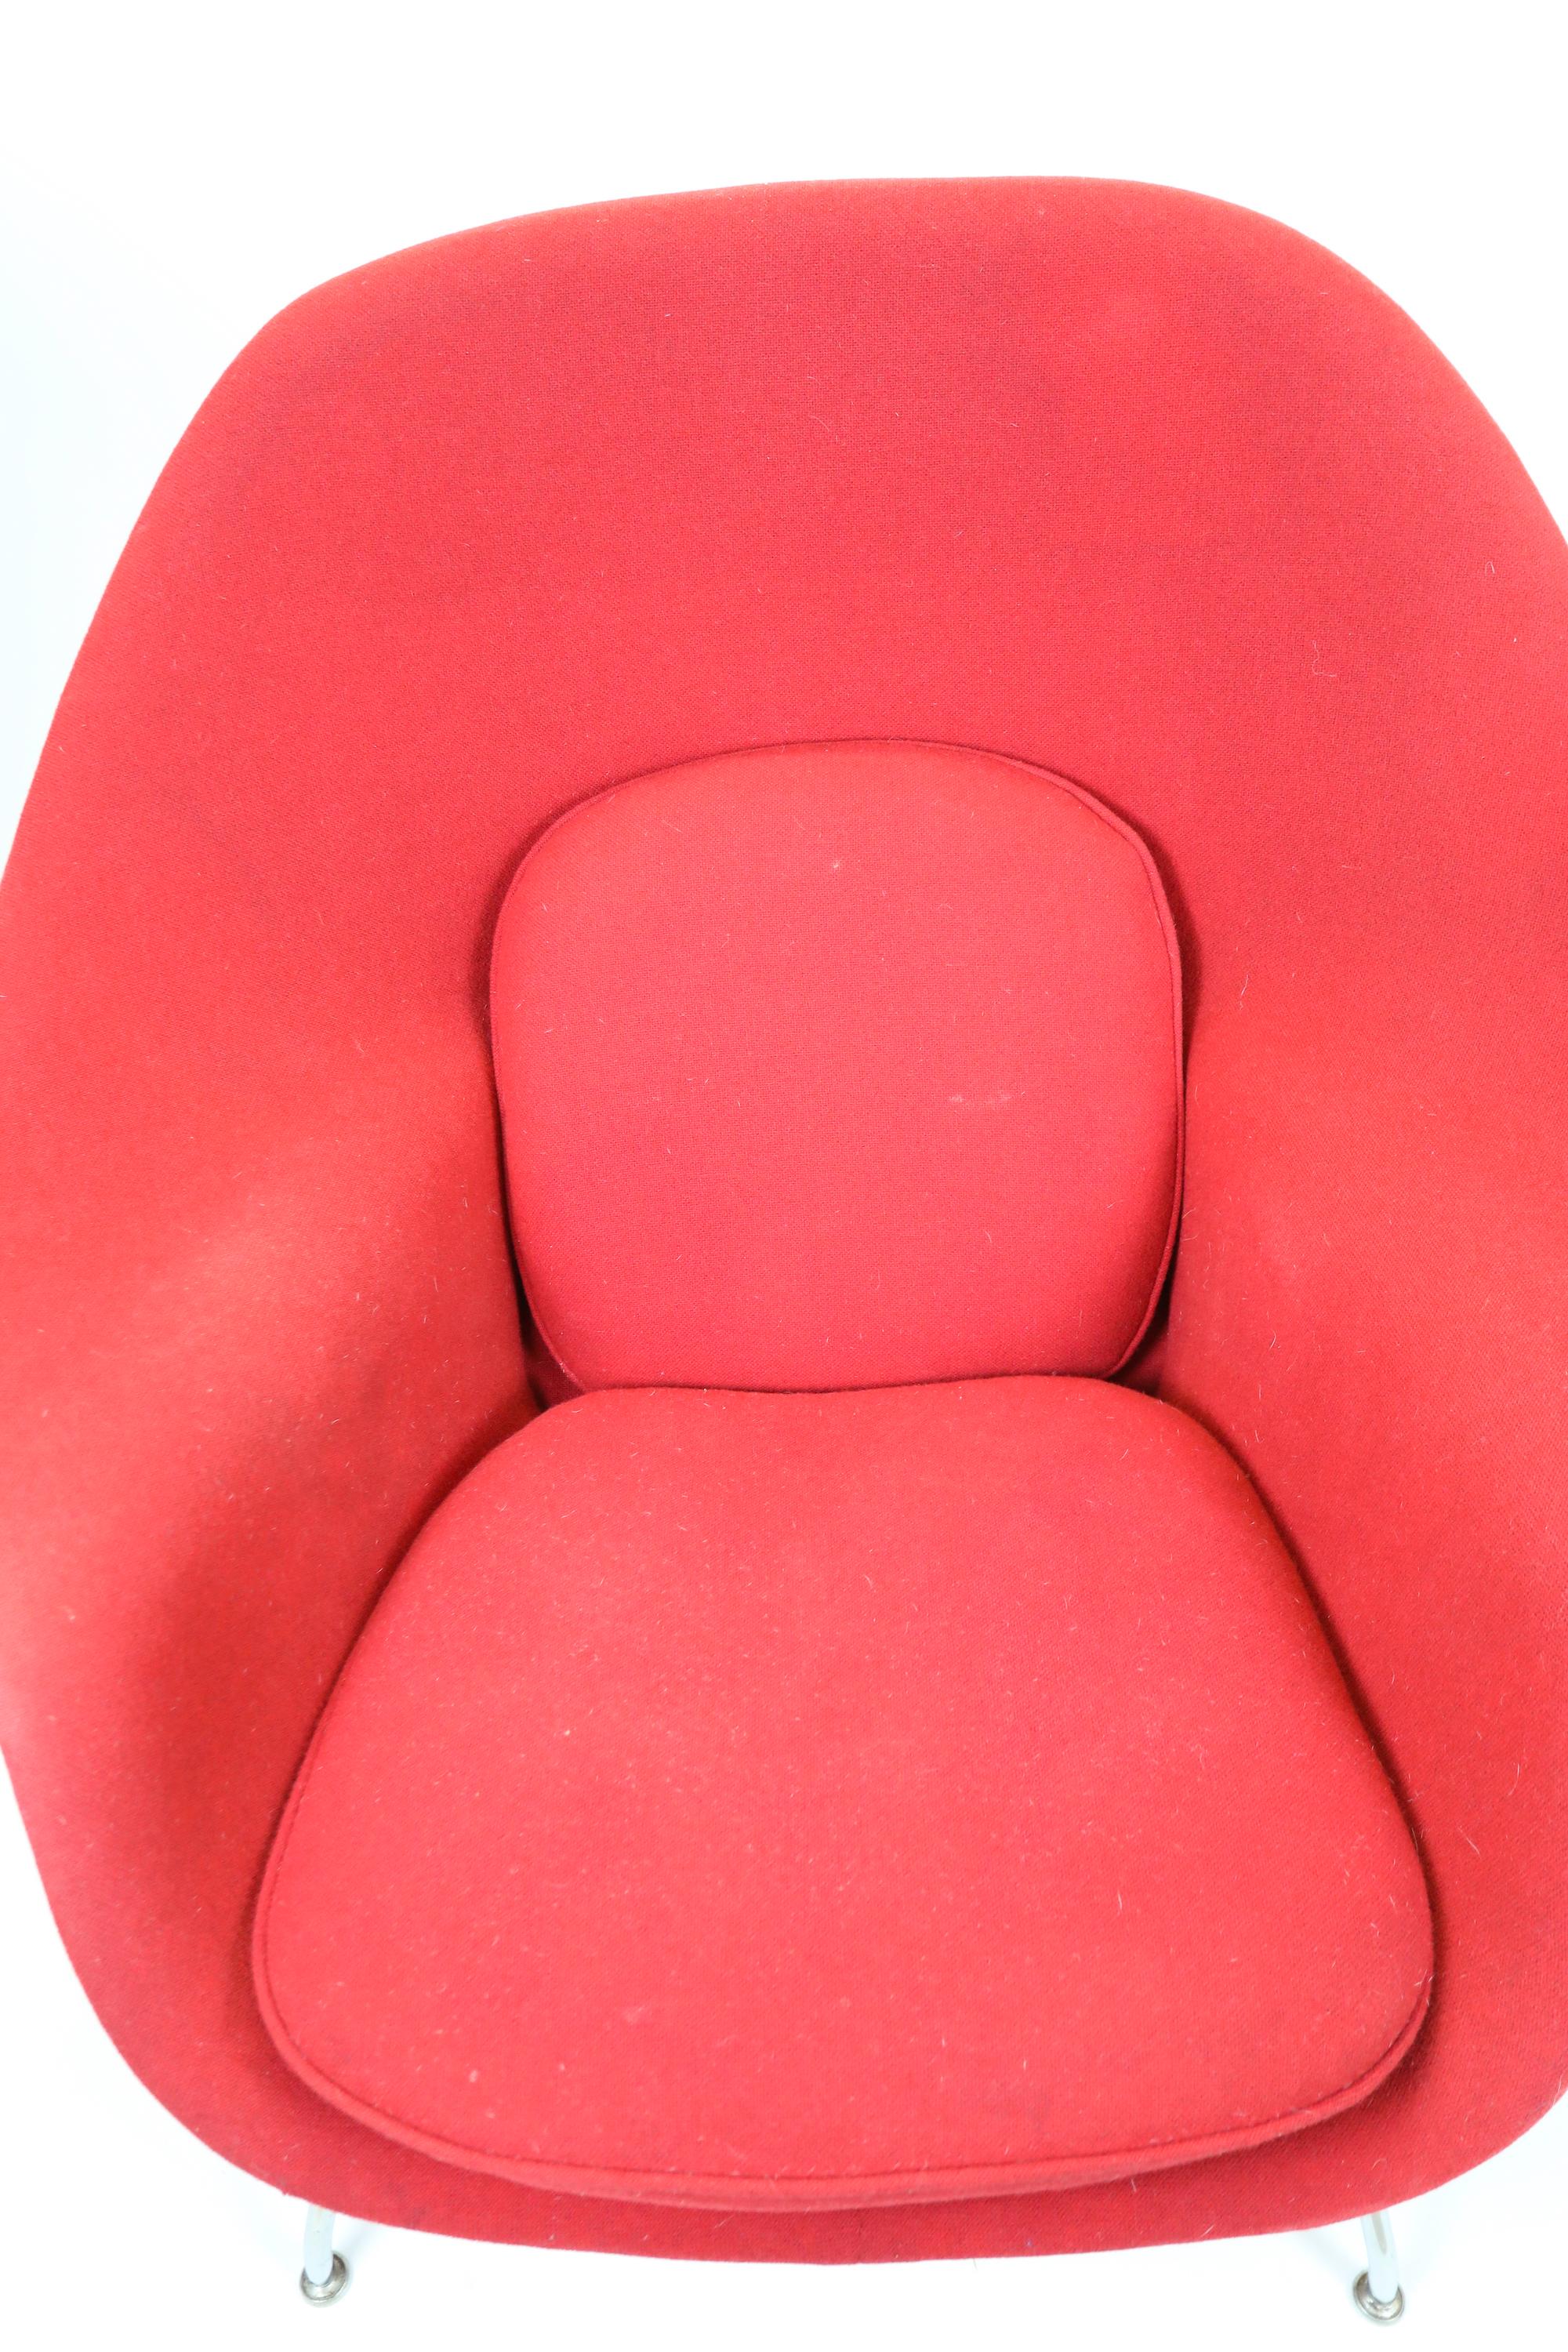 Upholstery Eero Saarinen Womb Chair And Ottoman For Sale